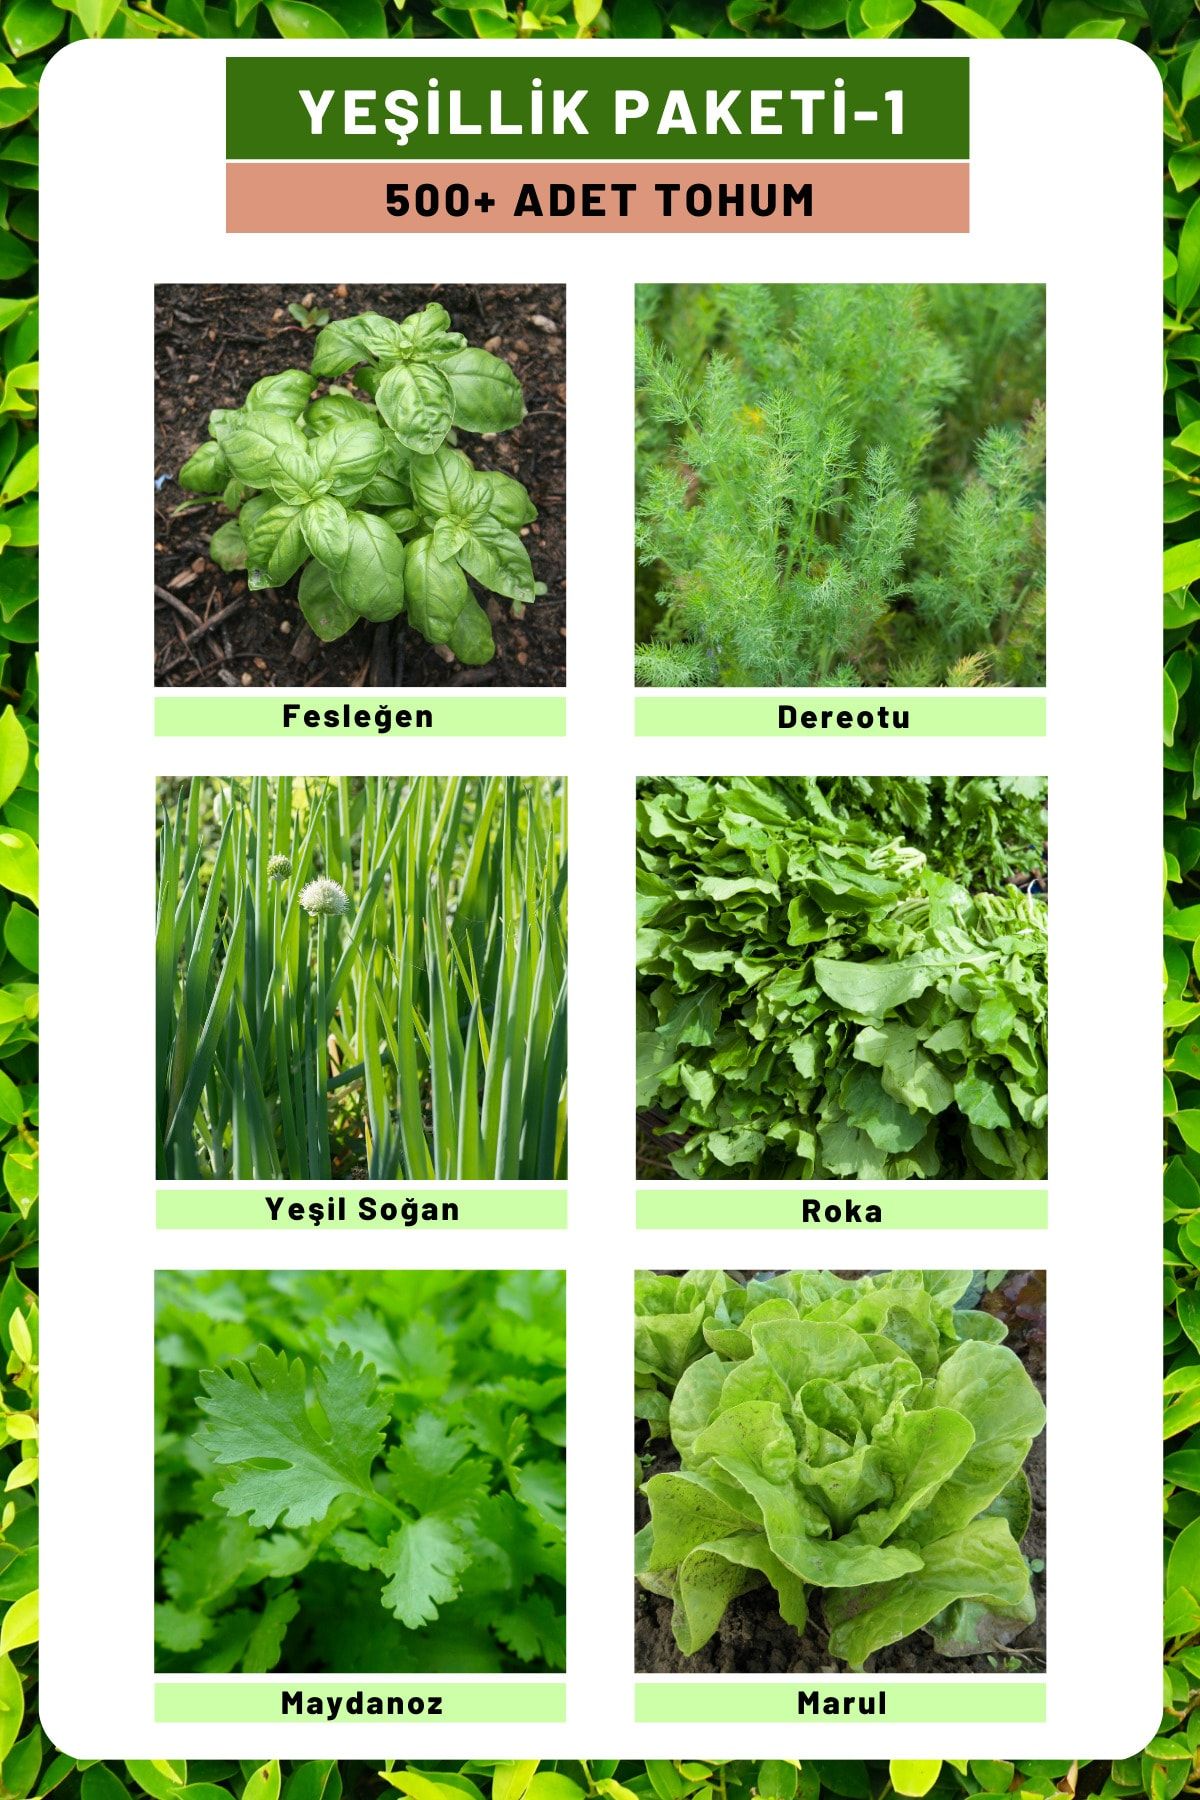 Tohum Seç Yeşillik Paketi-1 Fesleğen, Dereotu, Soğan, Roka, Maydanoz, Marul Tohum Seti, Toplam 500 Adet Tohum